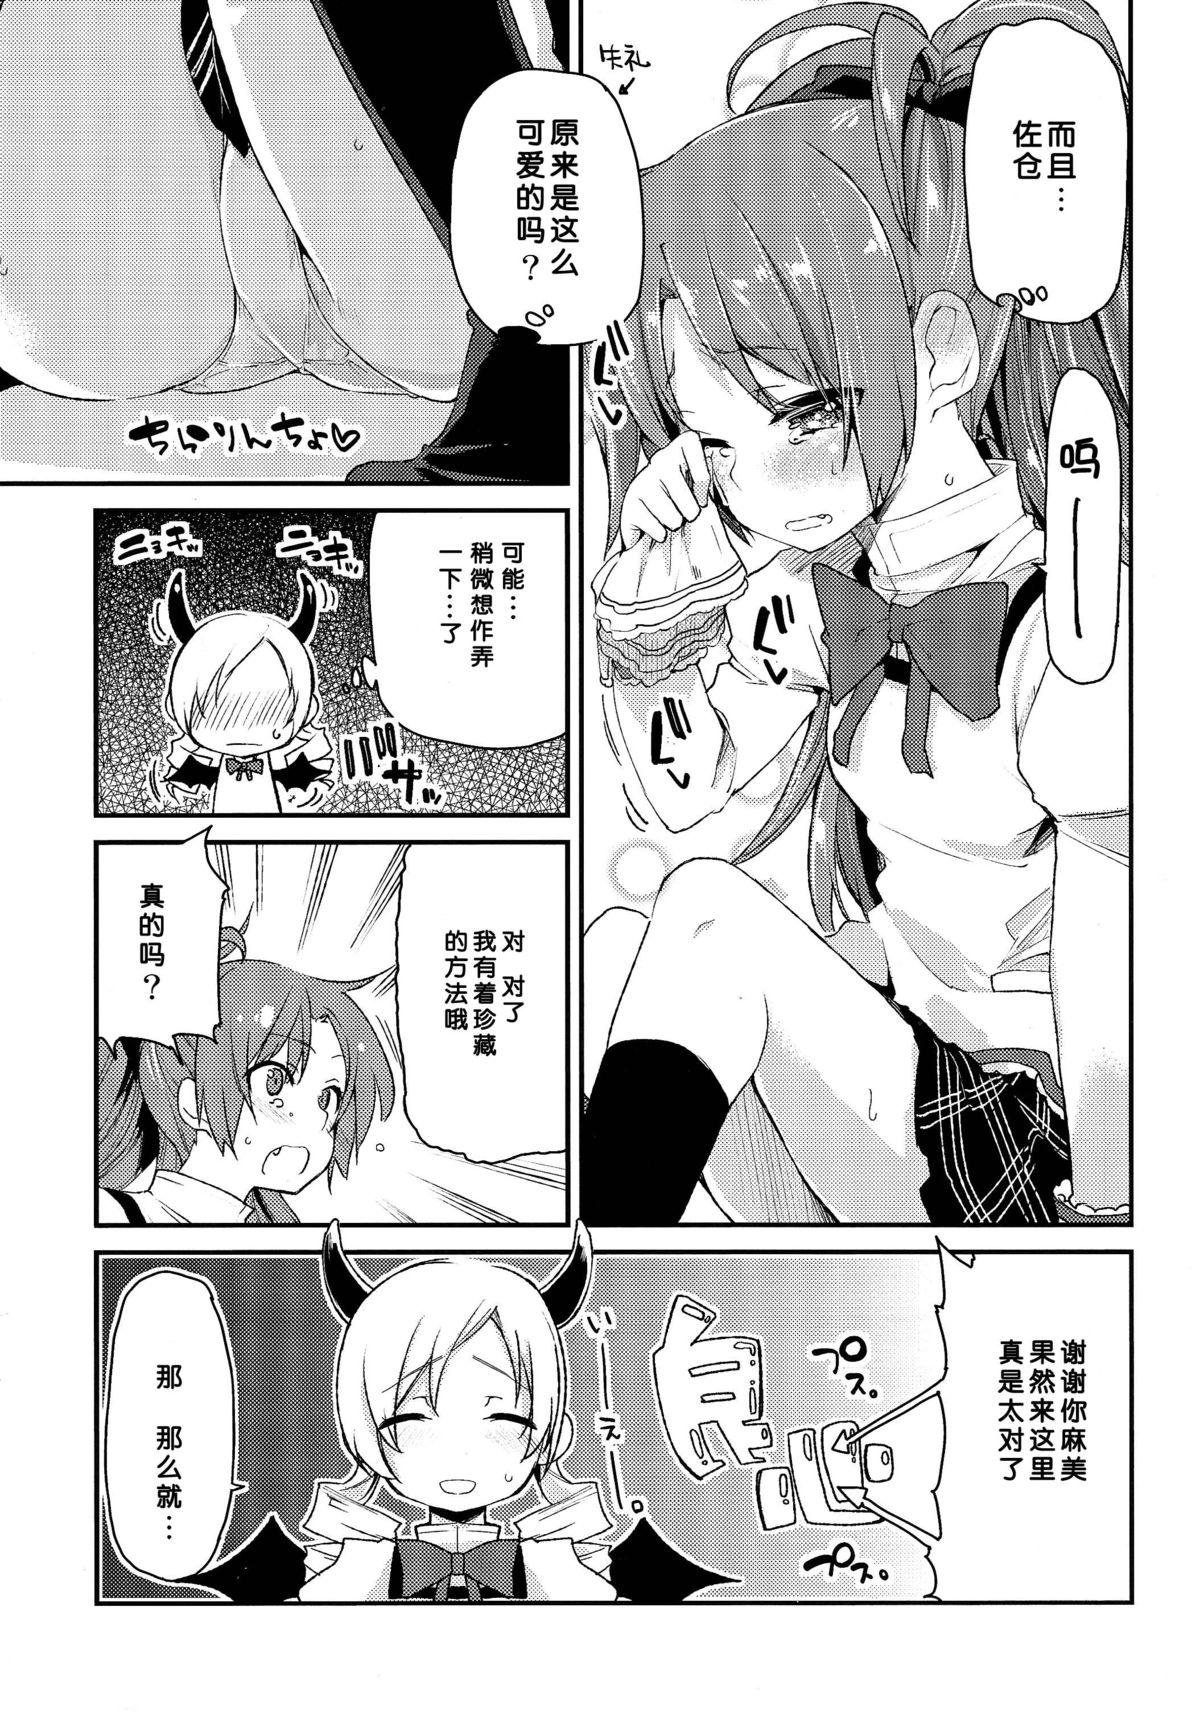 Piercing Sakura-san ga Tottemo Kawaii kara - Puella magi madoka magica Uniform - Page 9